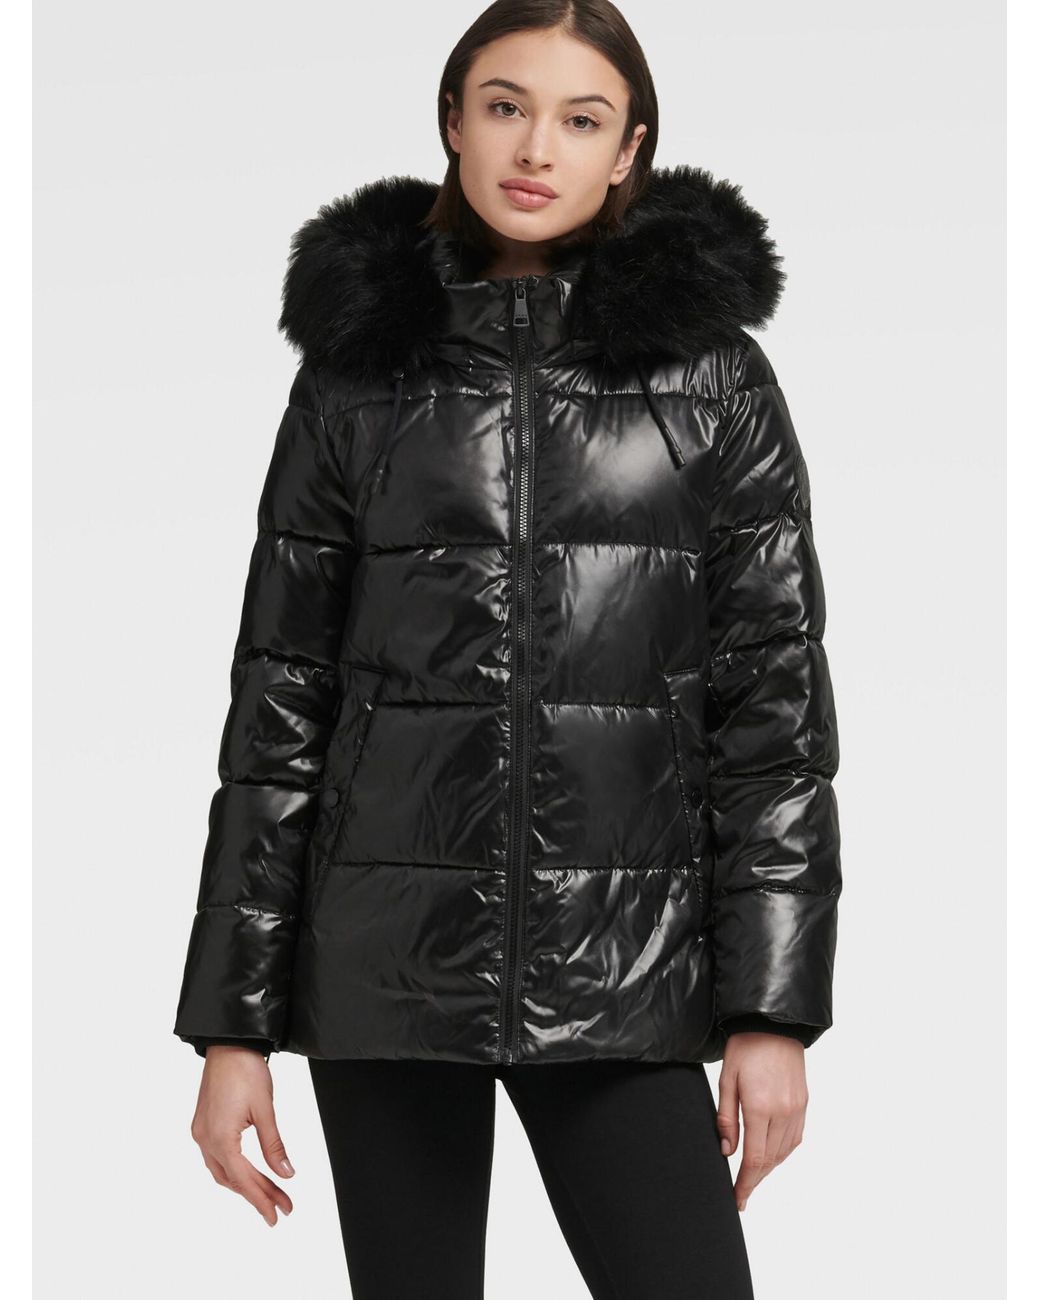 DKNY Glossy Puffer Jacket in Black | Lyst